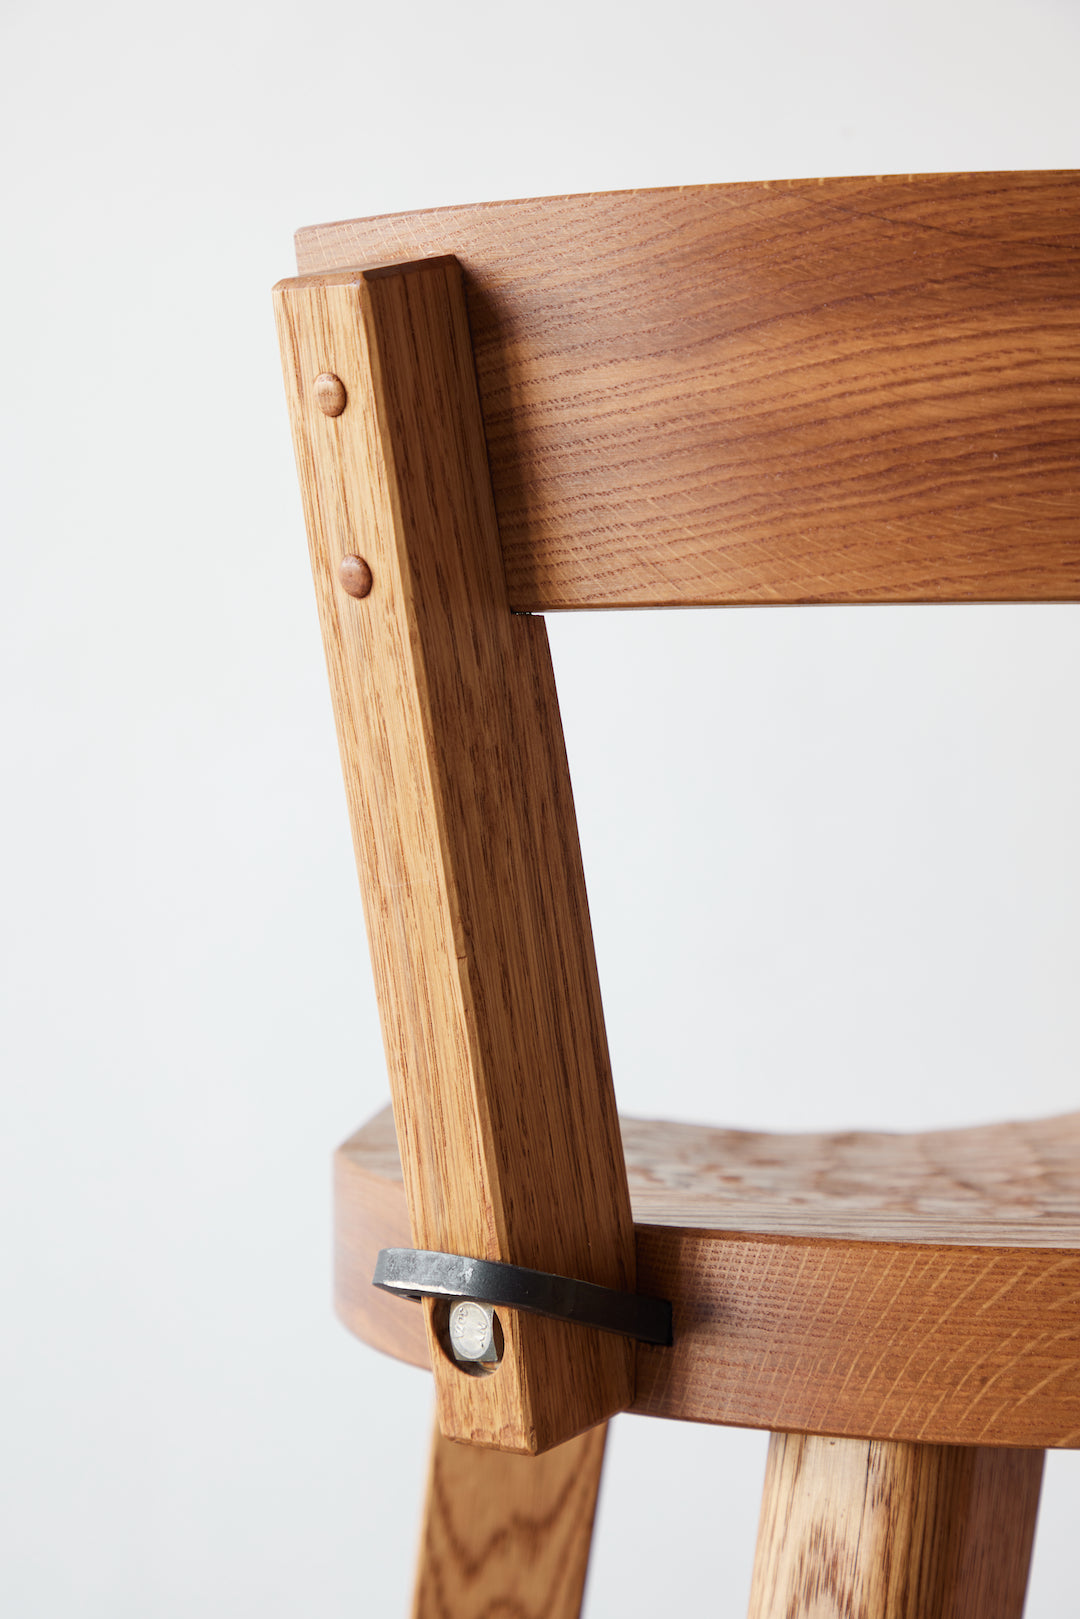 Furniture Marolles Three Leg Chair - In Stock